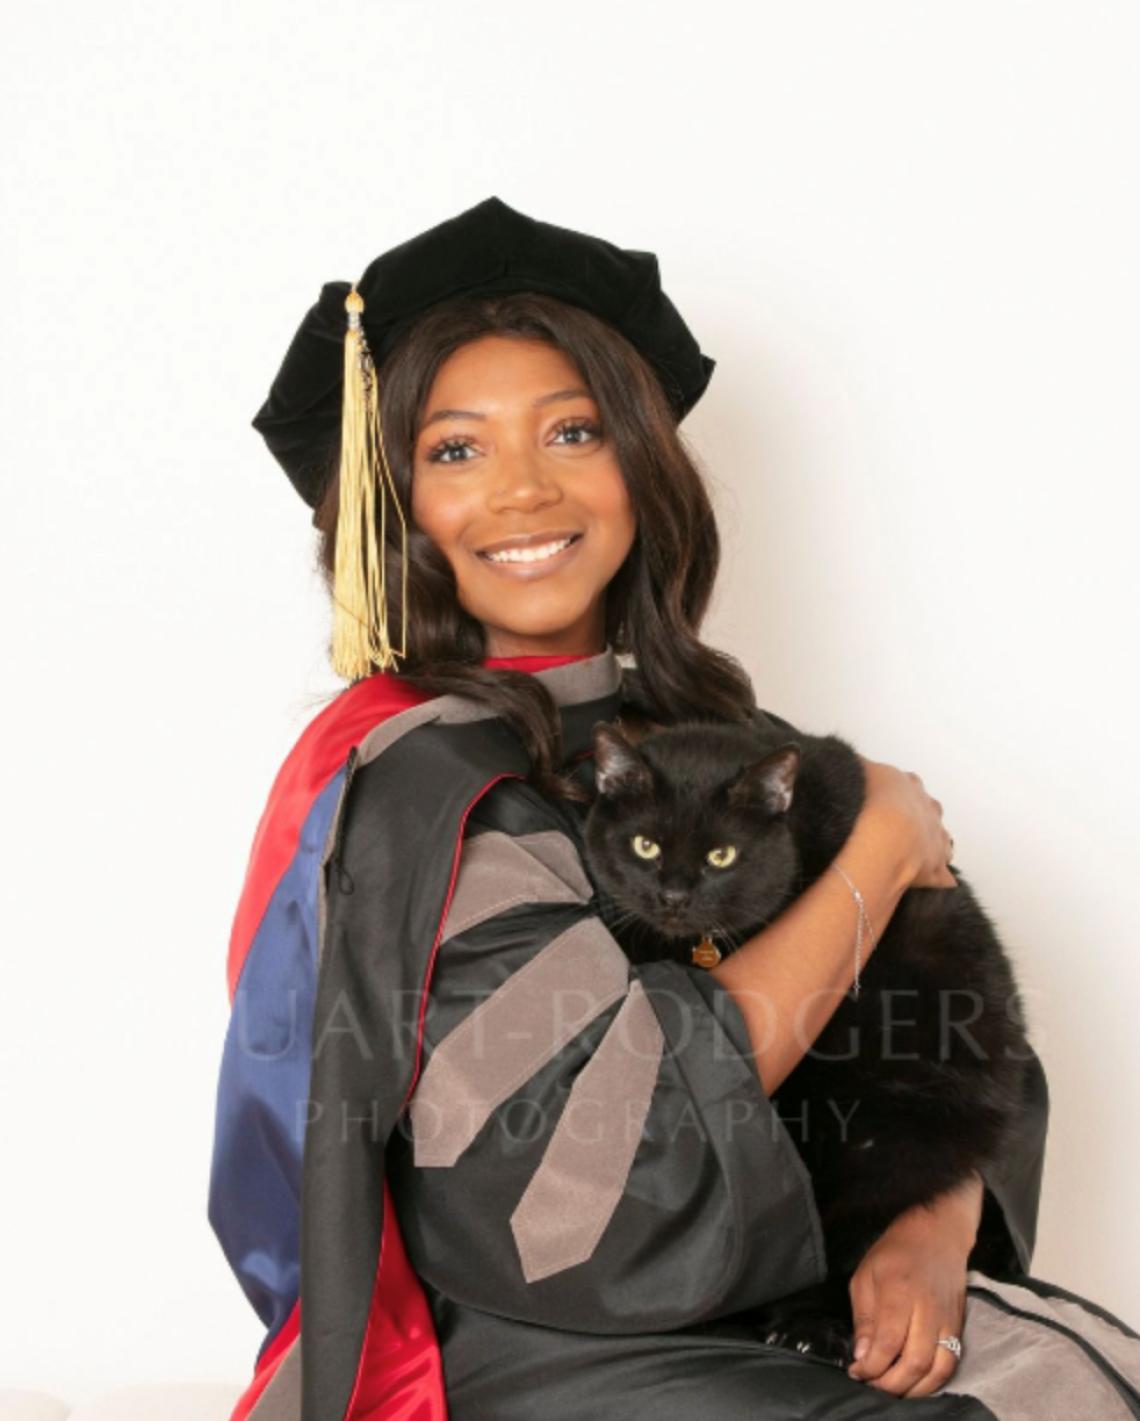 Deianira Smith wears graduation regalia and holds a black cat.